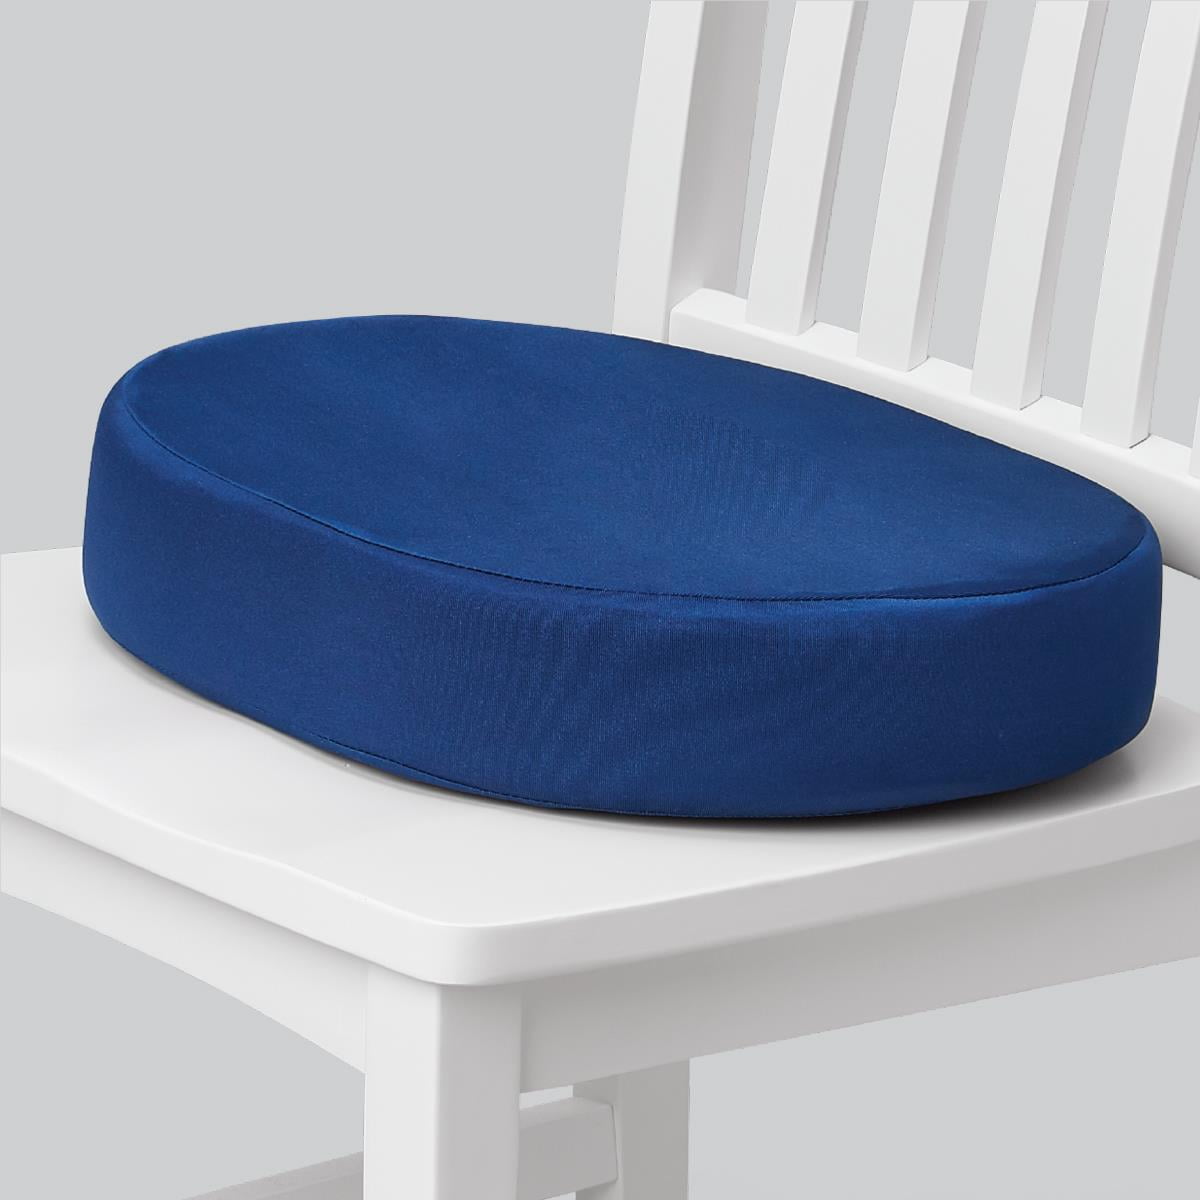 Timberlake Donut Seat Cushion in Blue